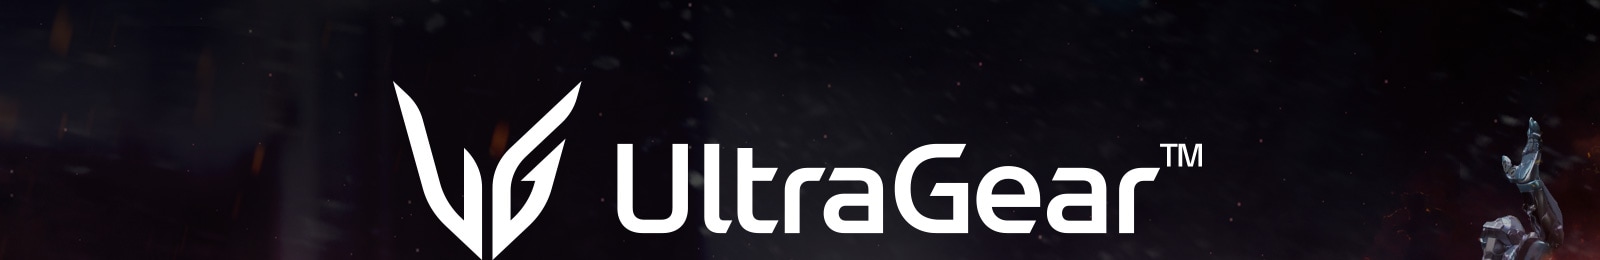 Logotipo de LG UltraGear.